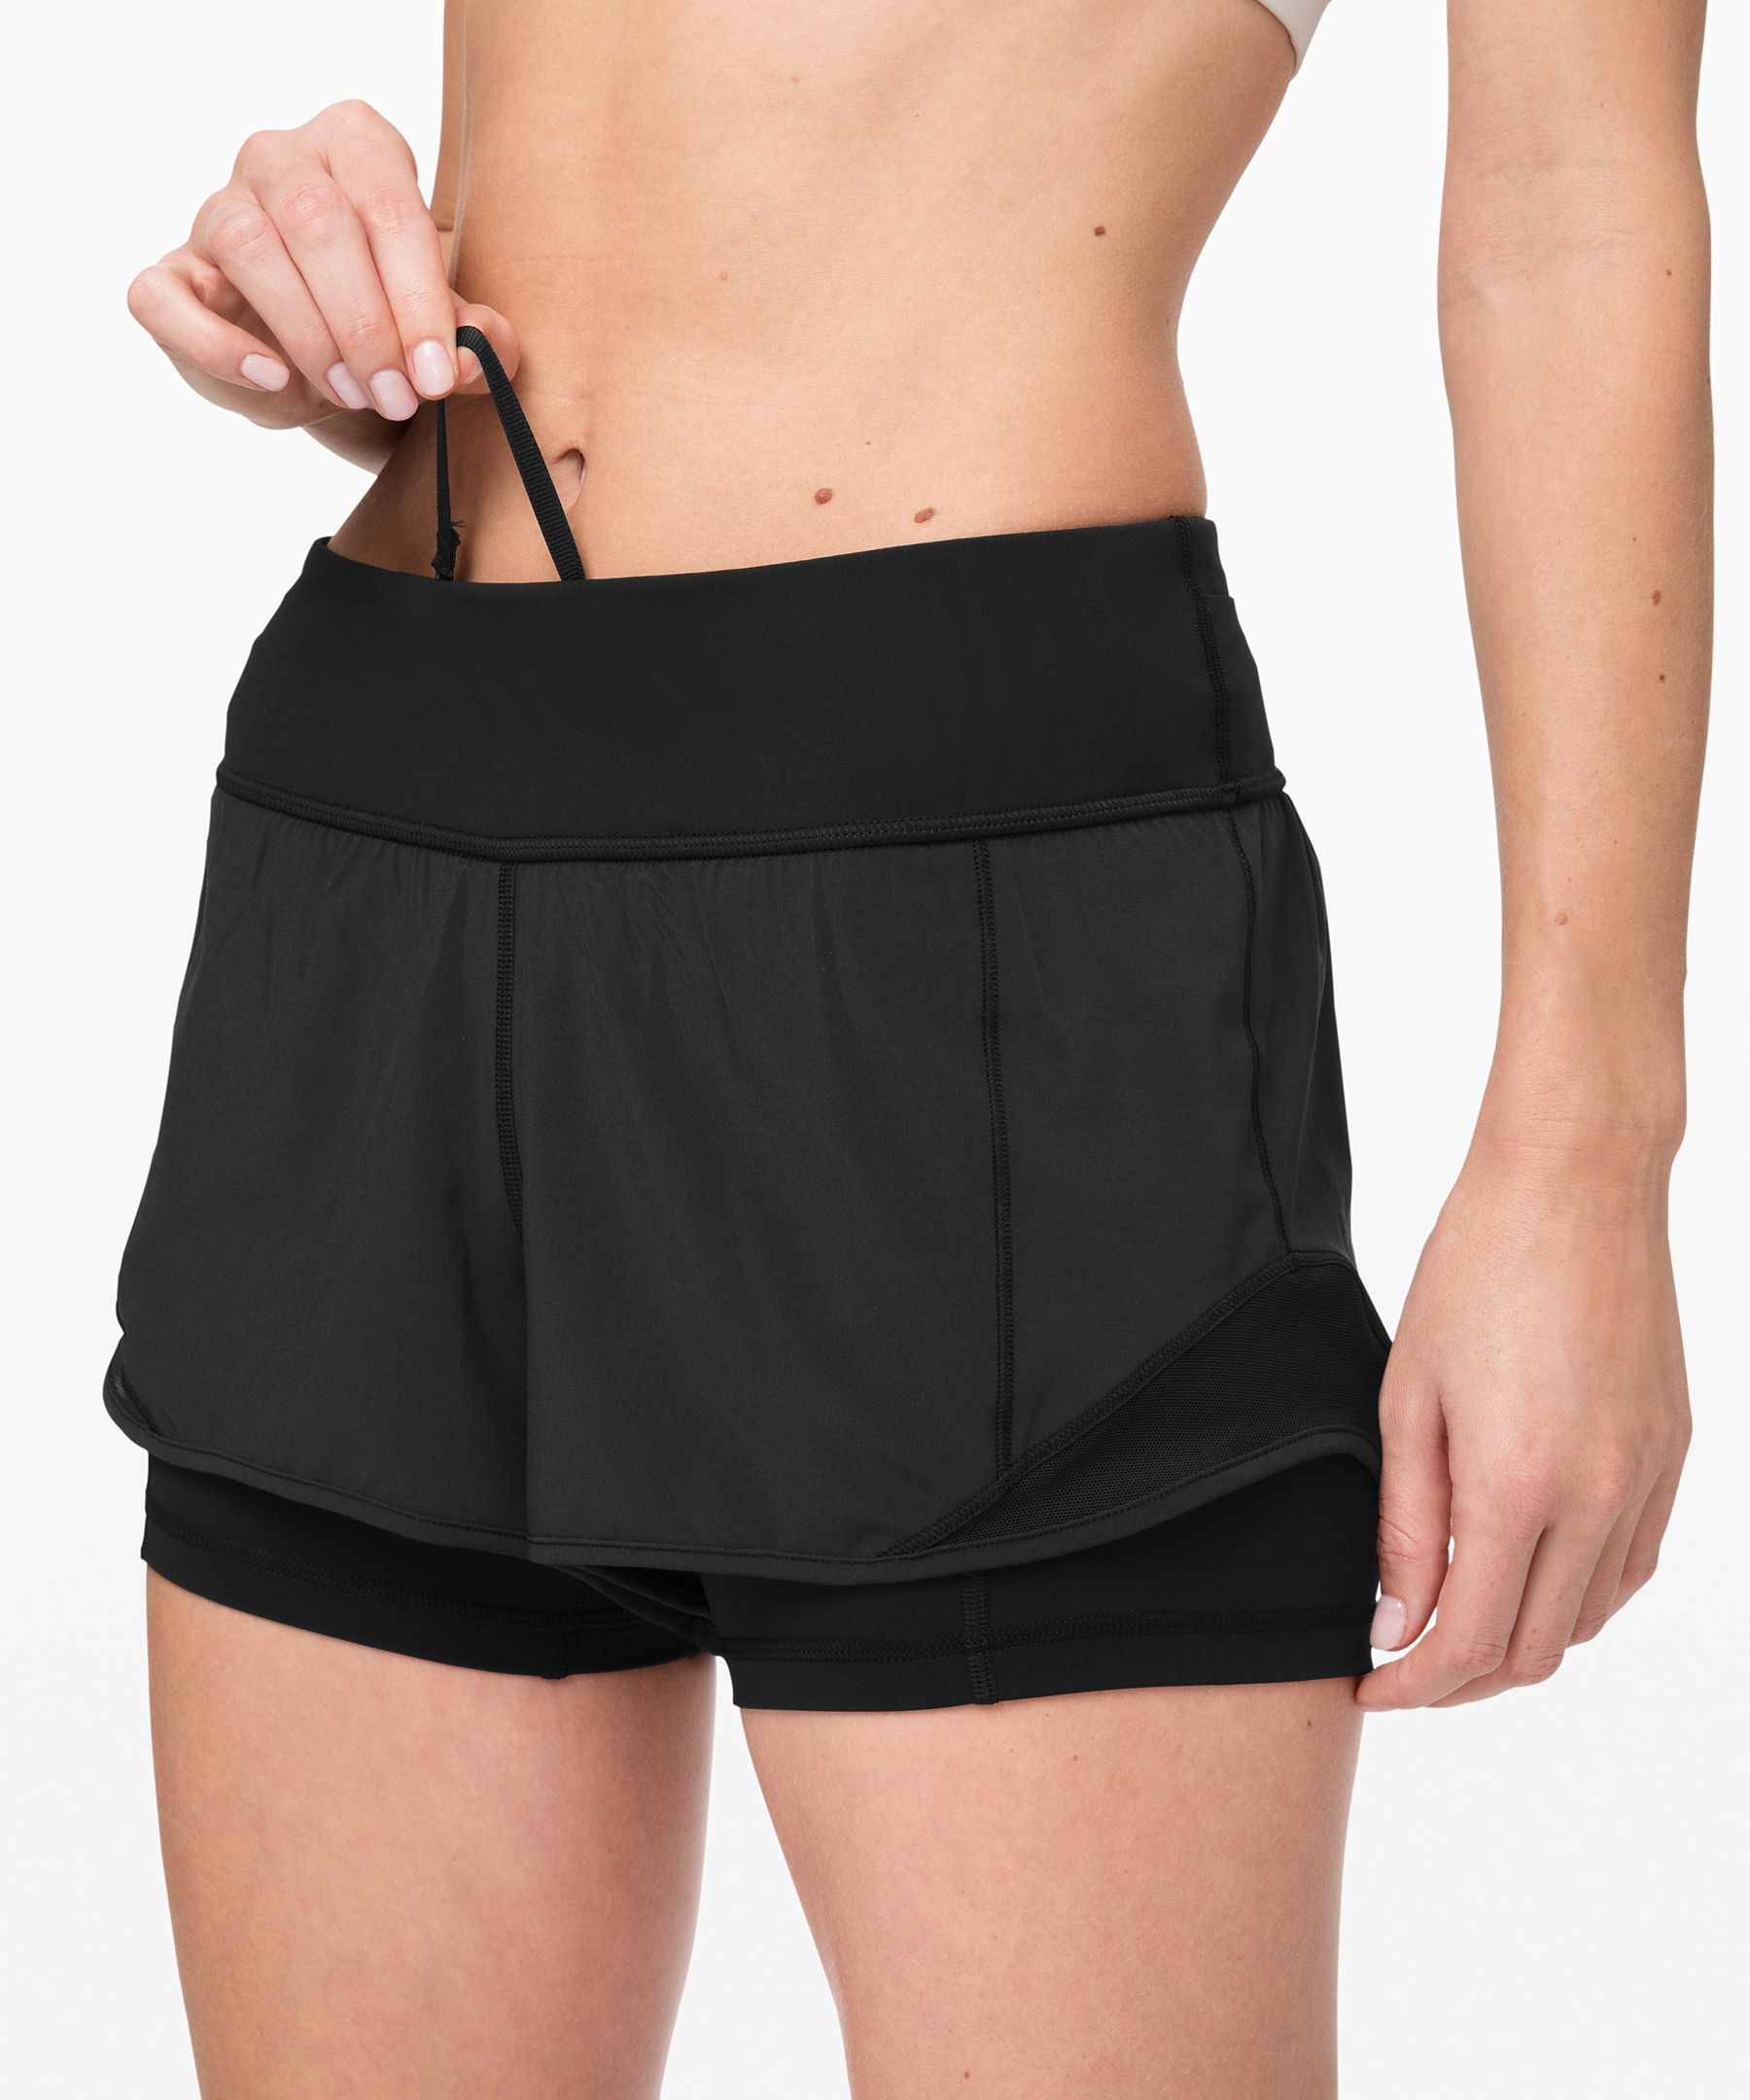 lululemon shorts with liner